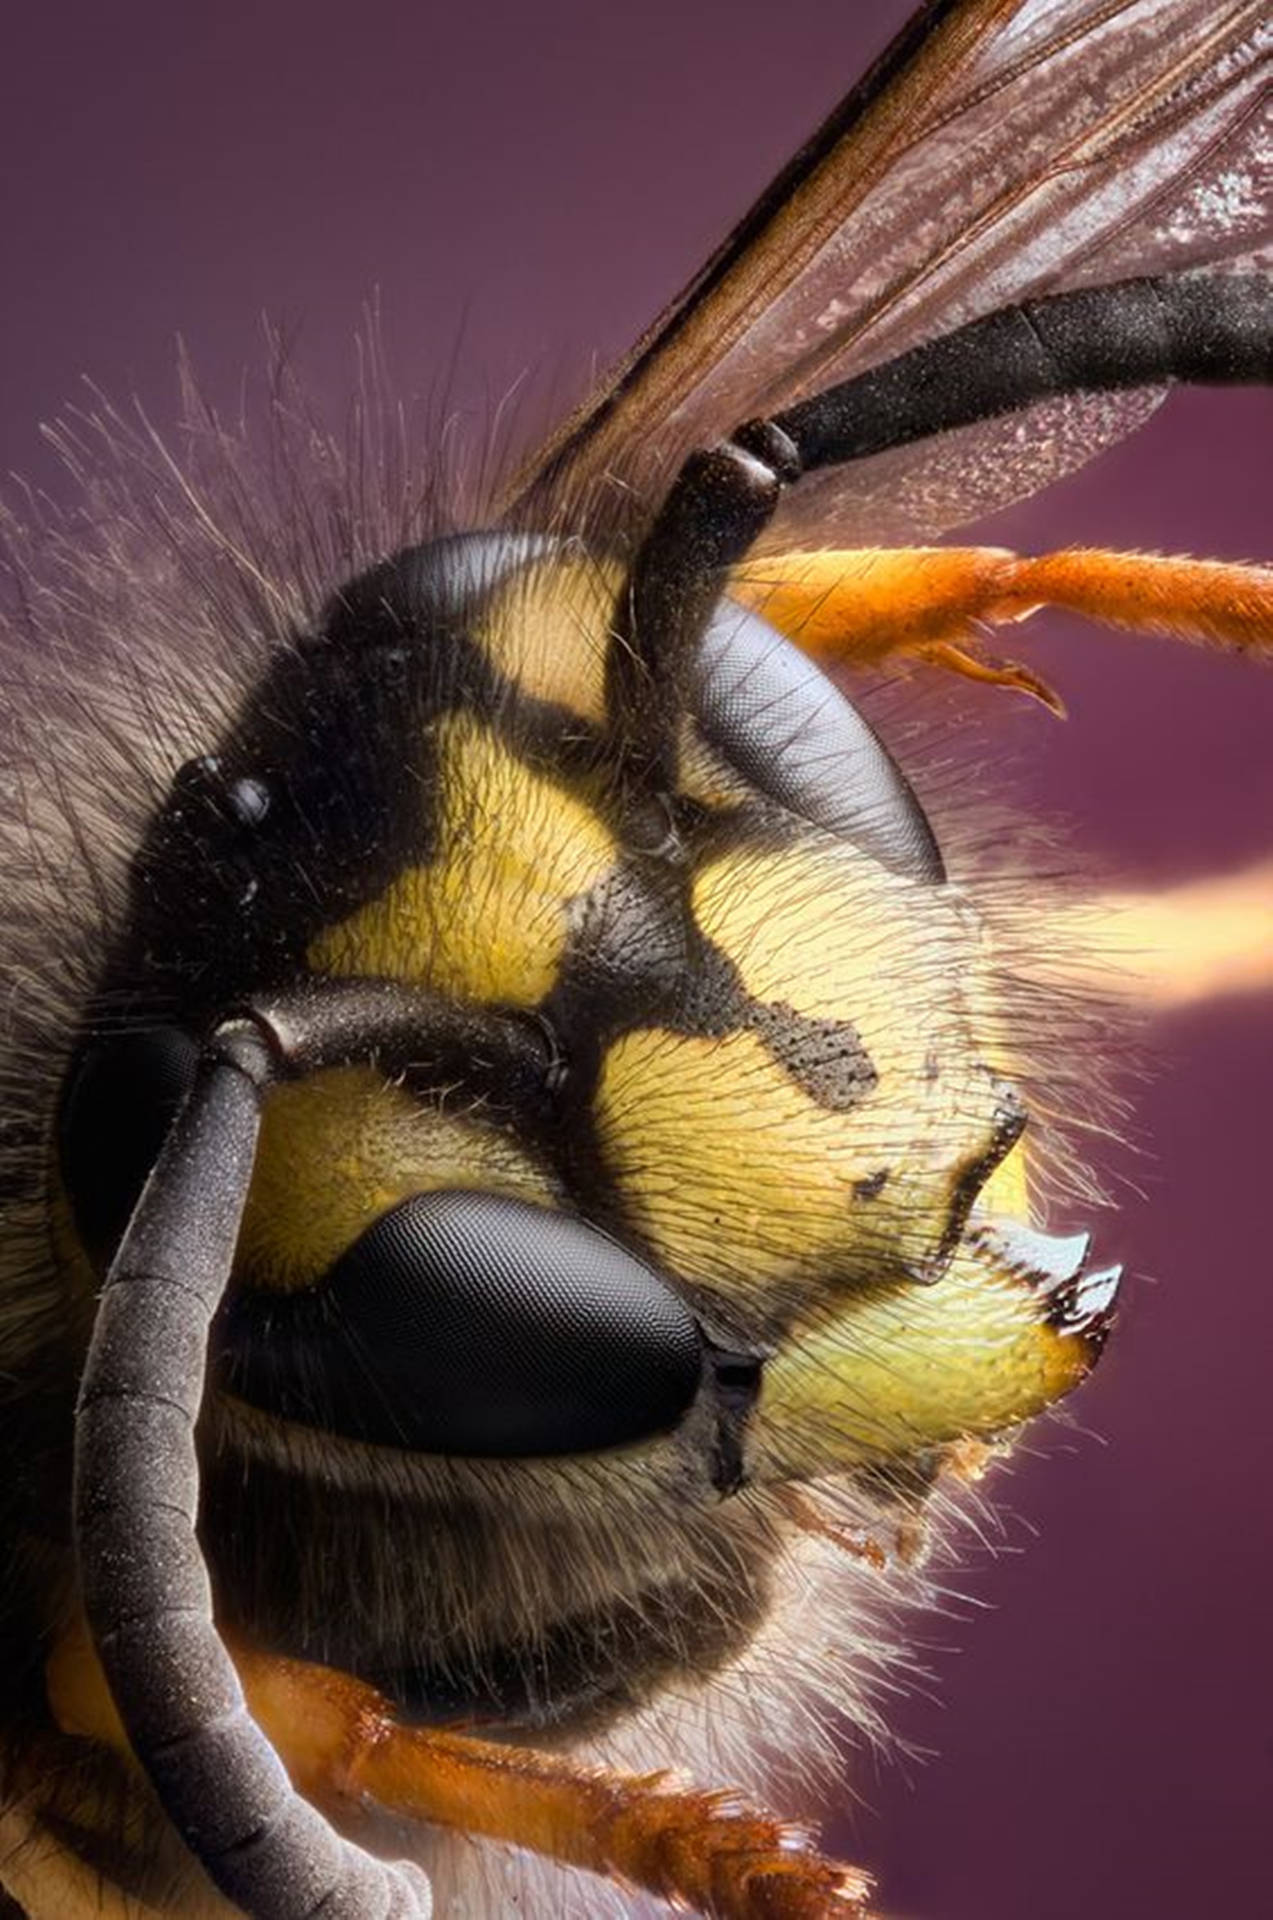 Intricate Wasp Anatomy - Close-up View of Sensory Hairs Wallpaper